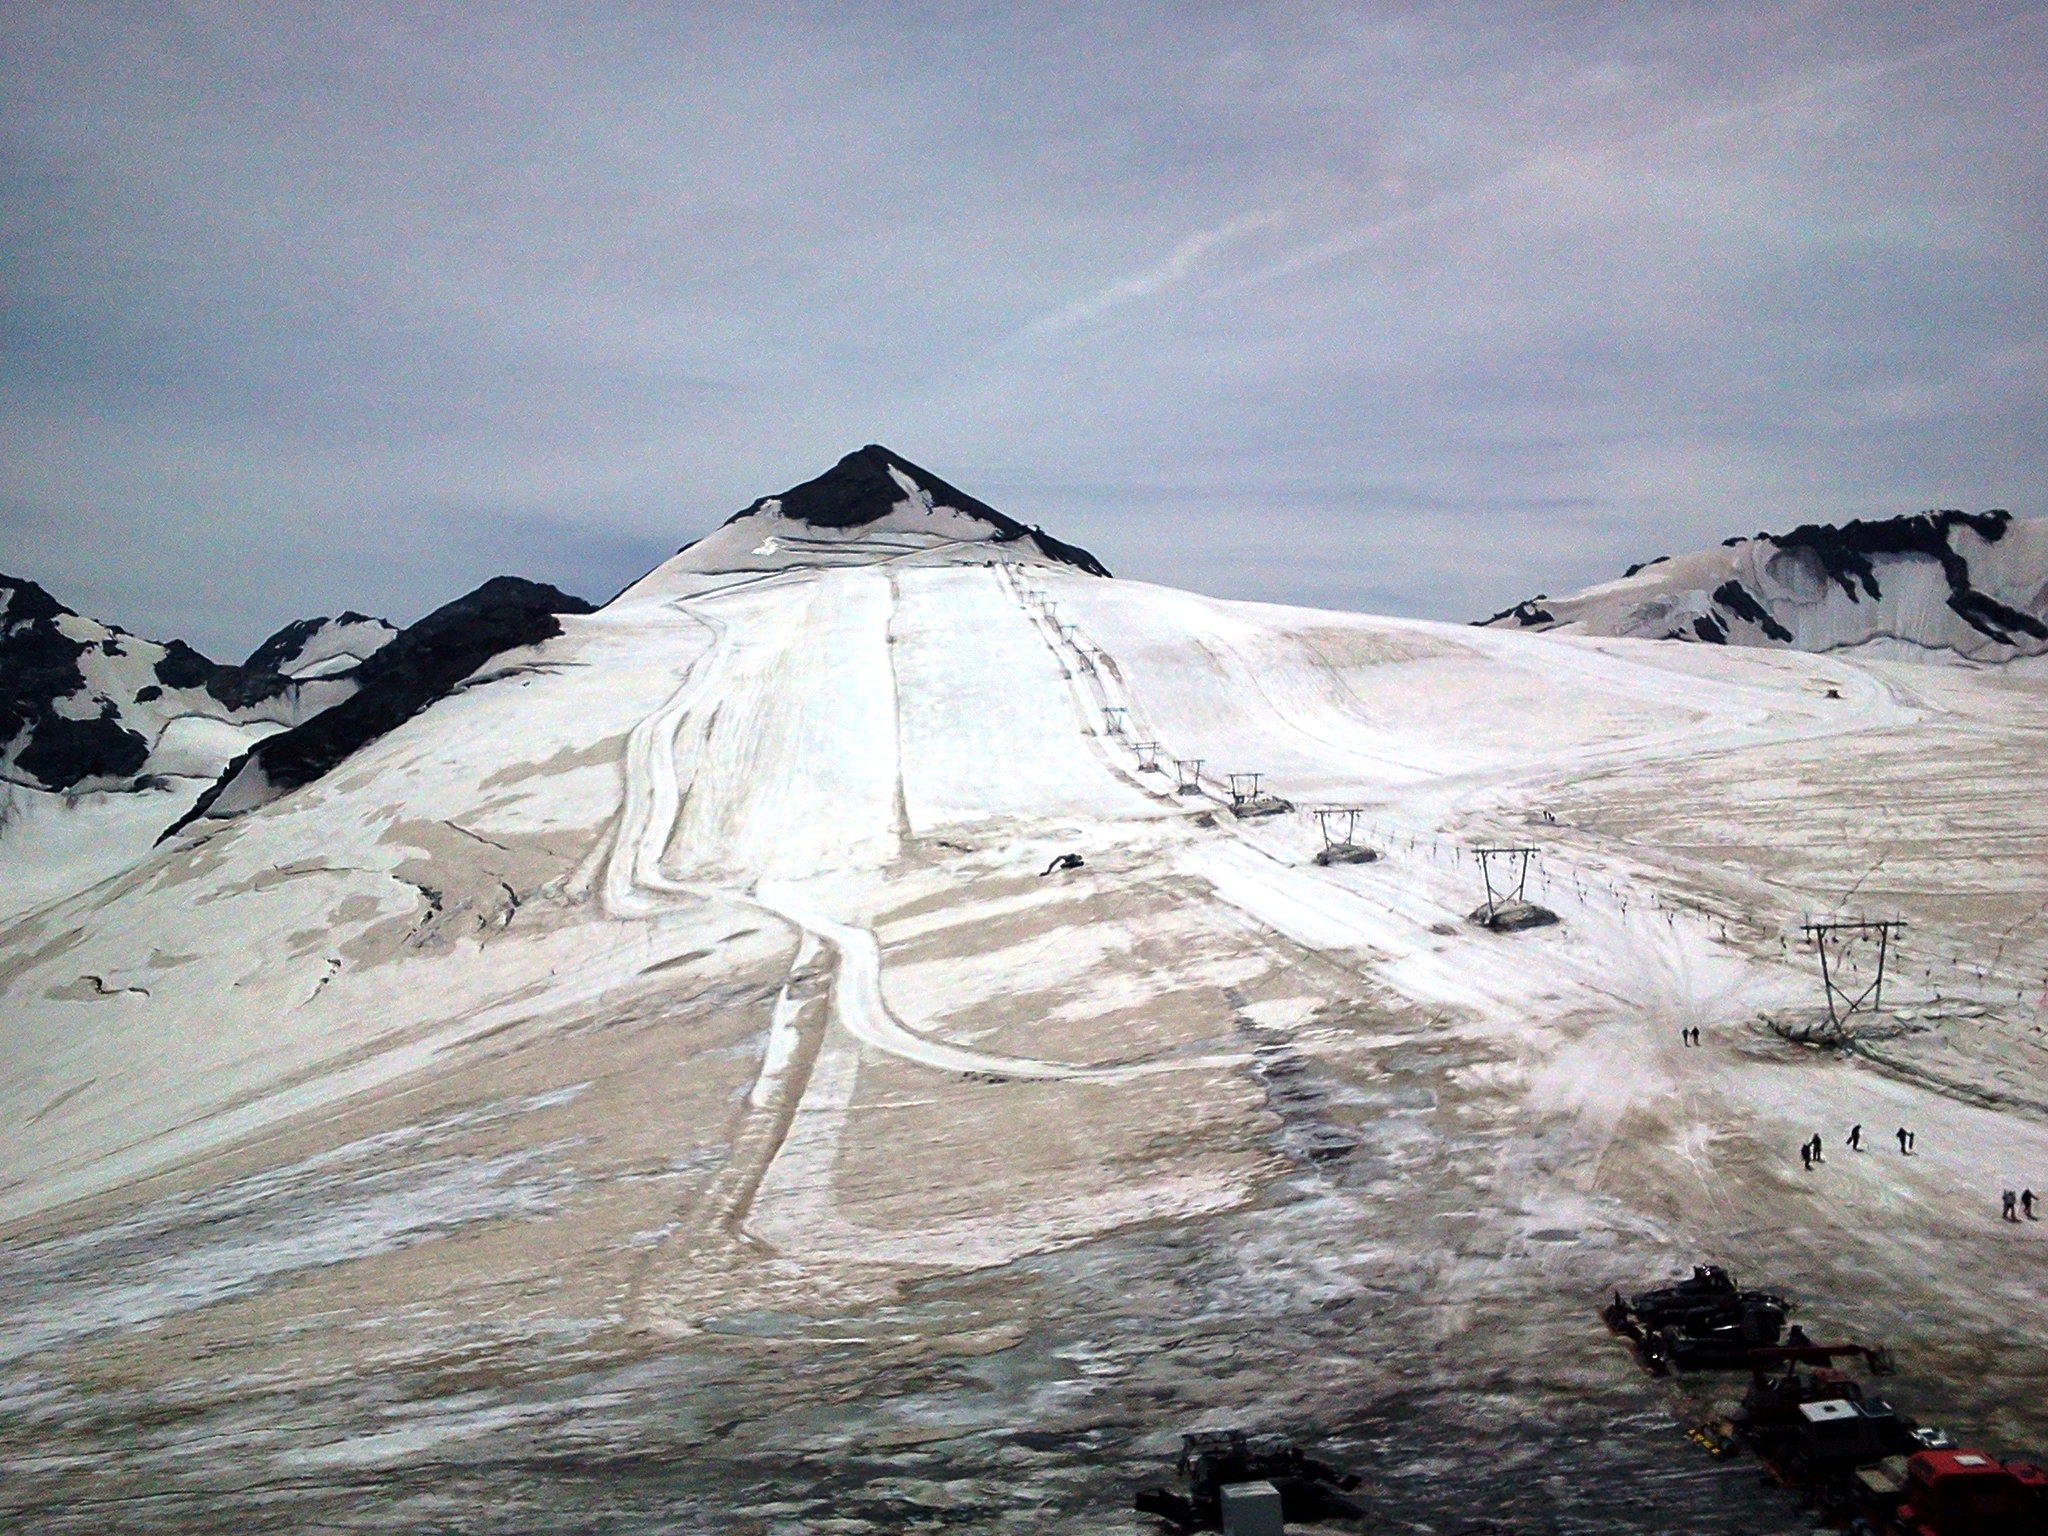 Stelvio glacier, Passo Dello Stelvio Stilfserjoch